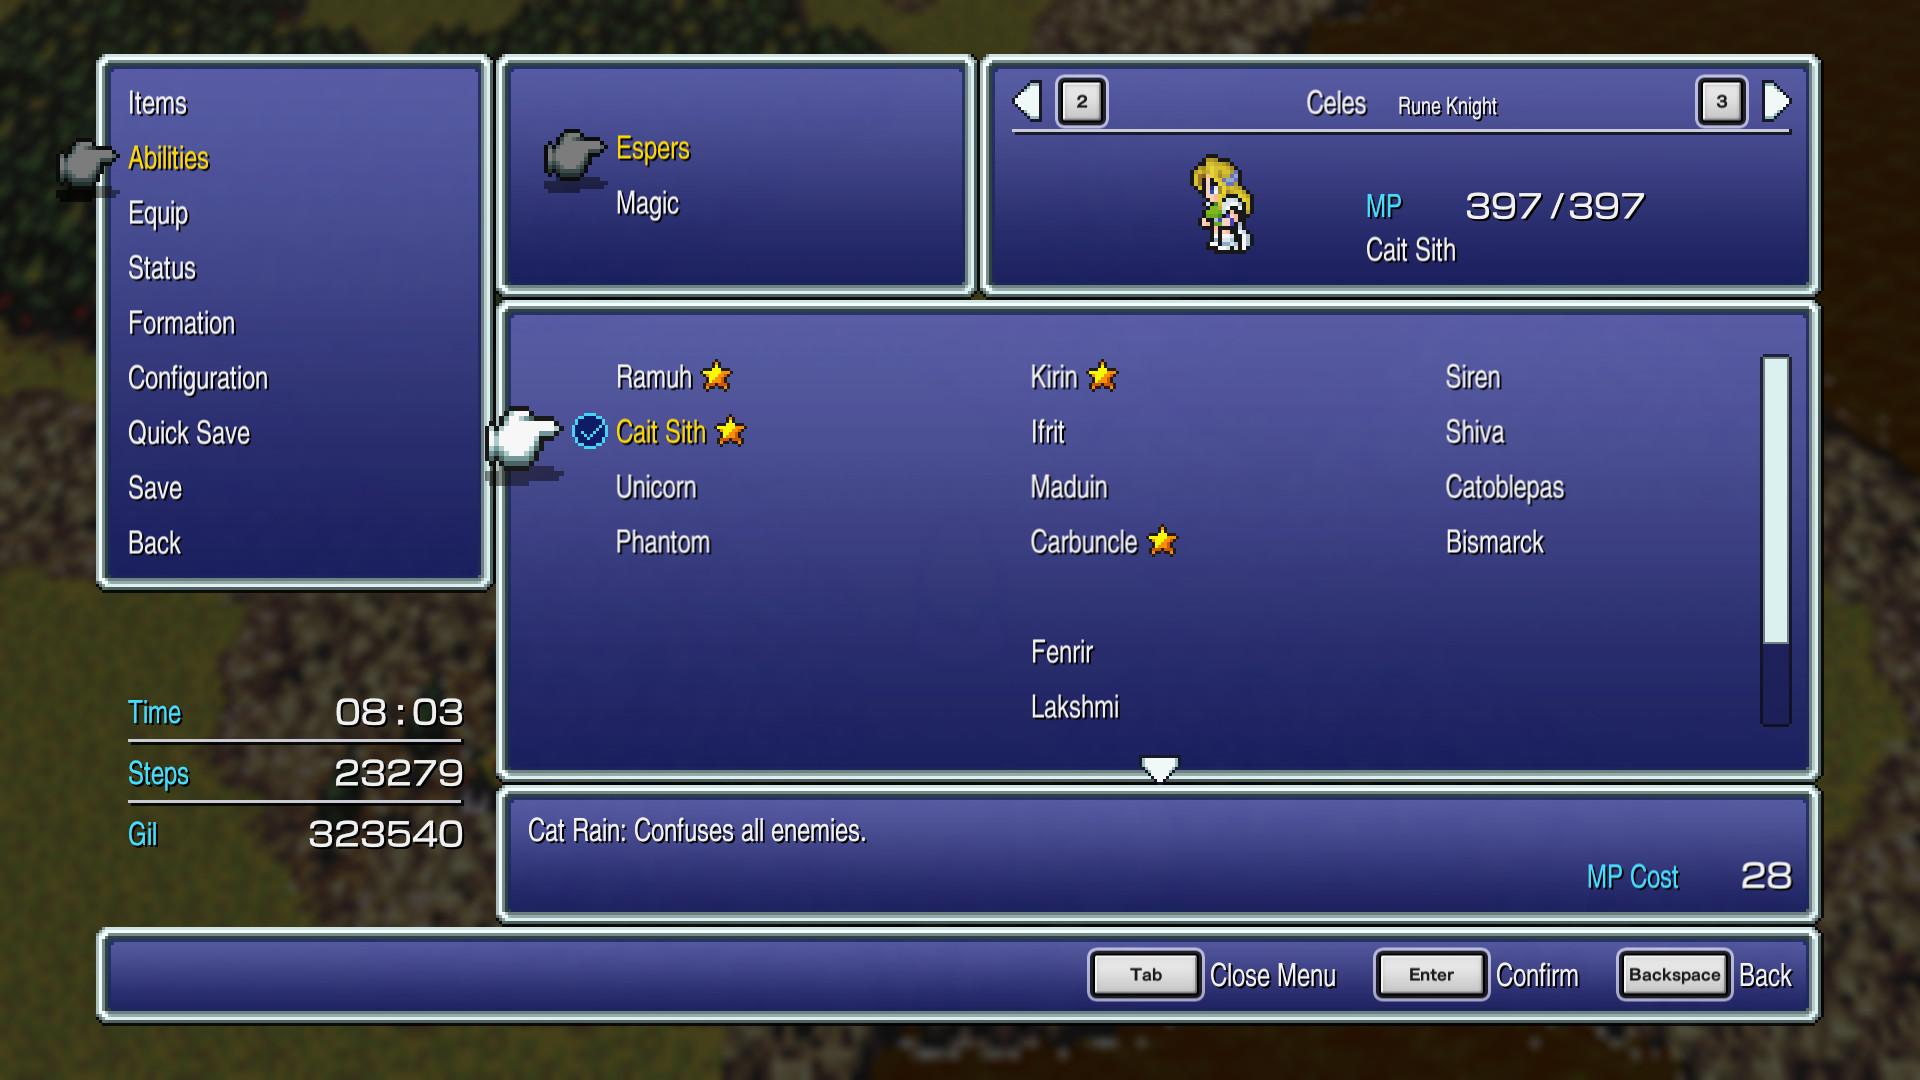 Screenshot №5 from game FINAL FANTASY VI